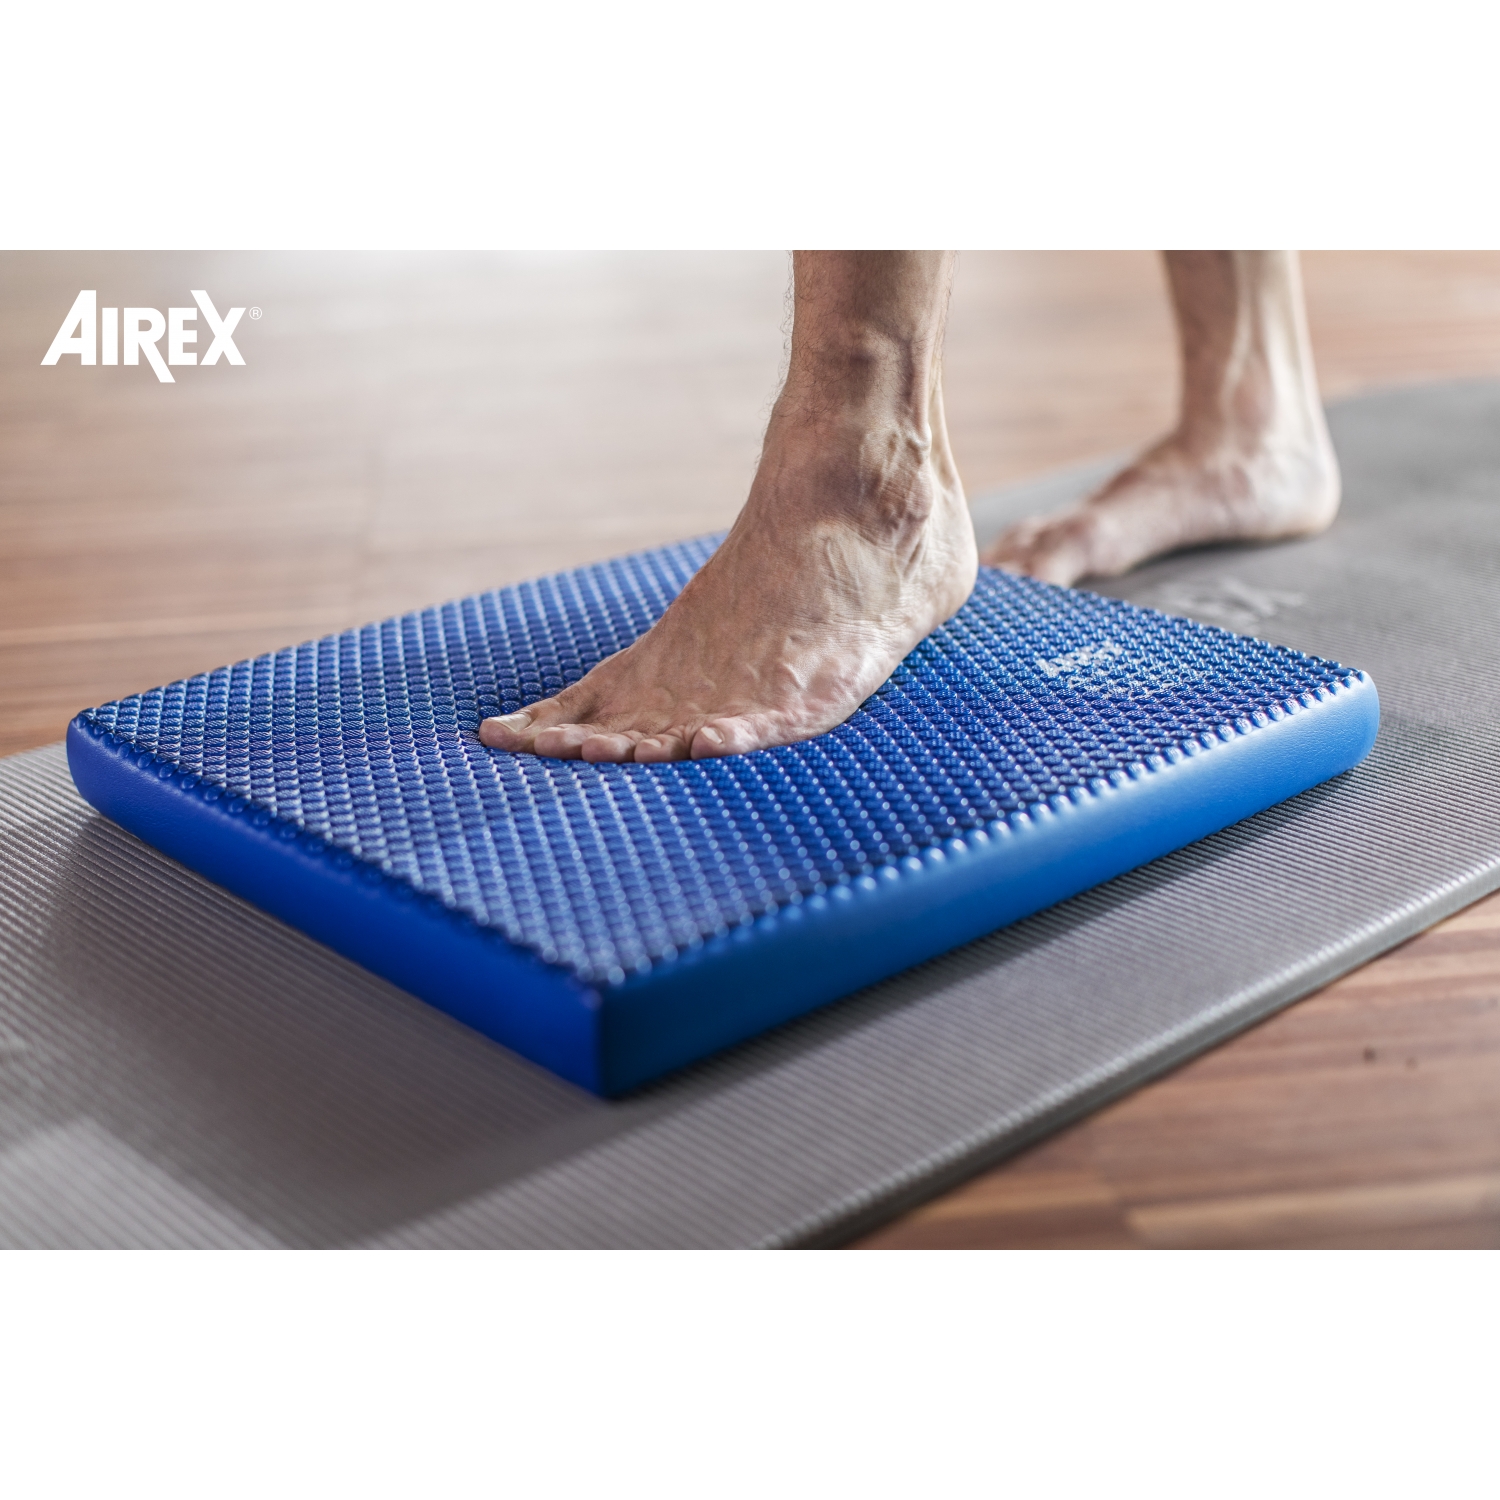 Airex Balance Pad Solid - 46 x 41 x 5 cm - bleu royal